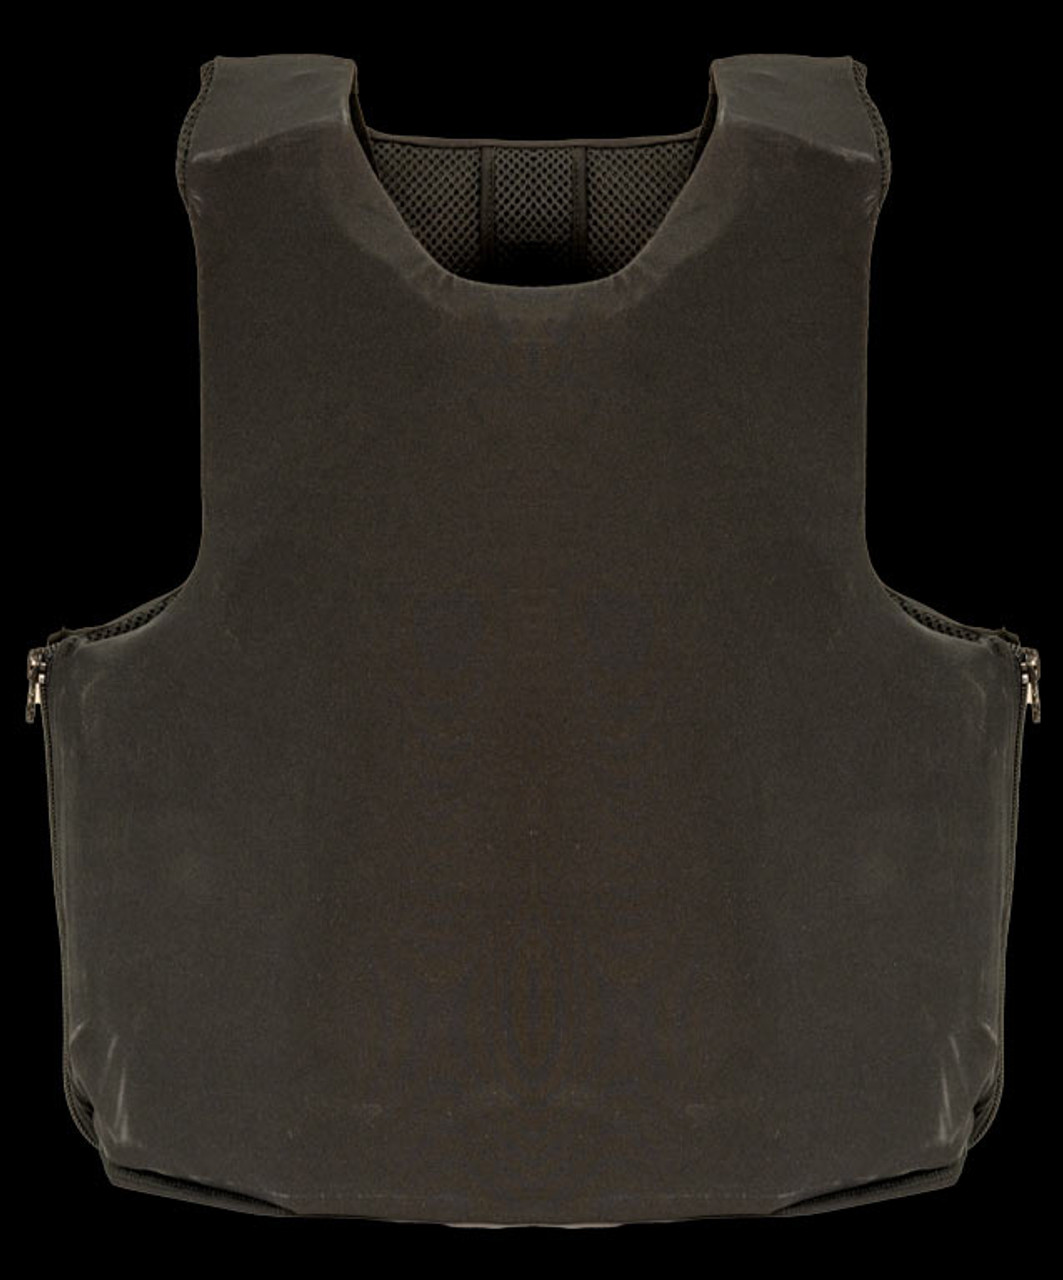 RTS Tactical Hero's Level IIIA+ NIJ 06 Concealable Body Armor Vest Small / No